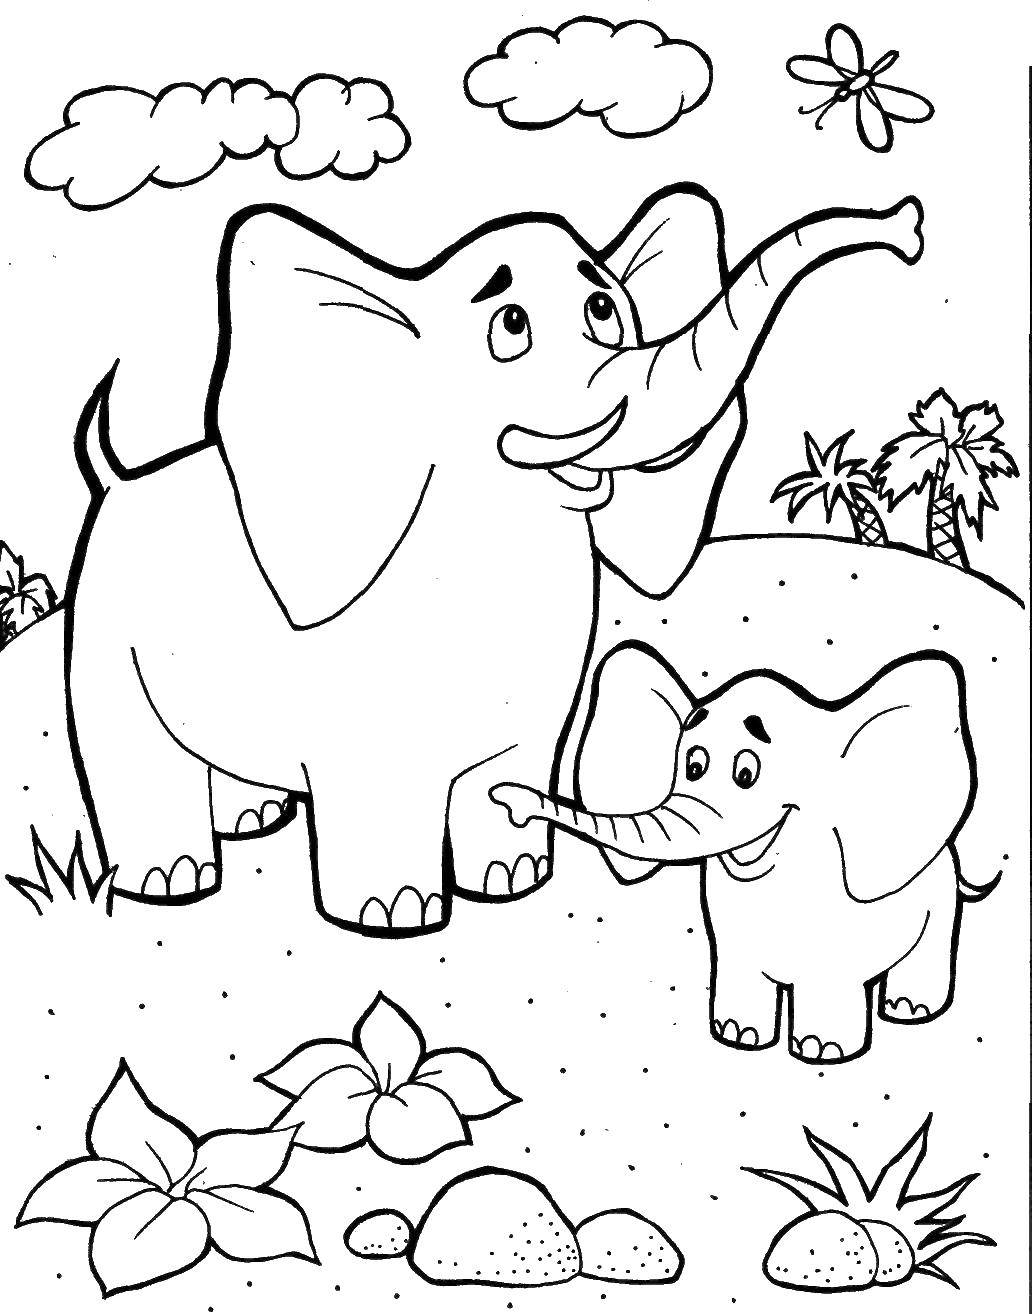 Coloring The elephant and the elephant. Category Animals. Tags:  elephant, elephant.